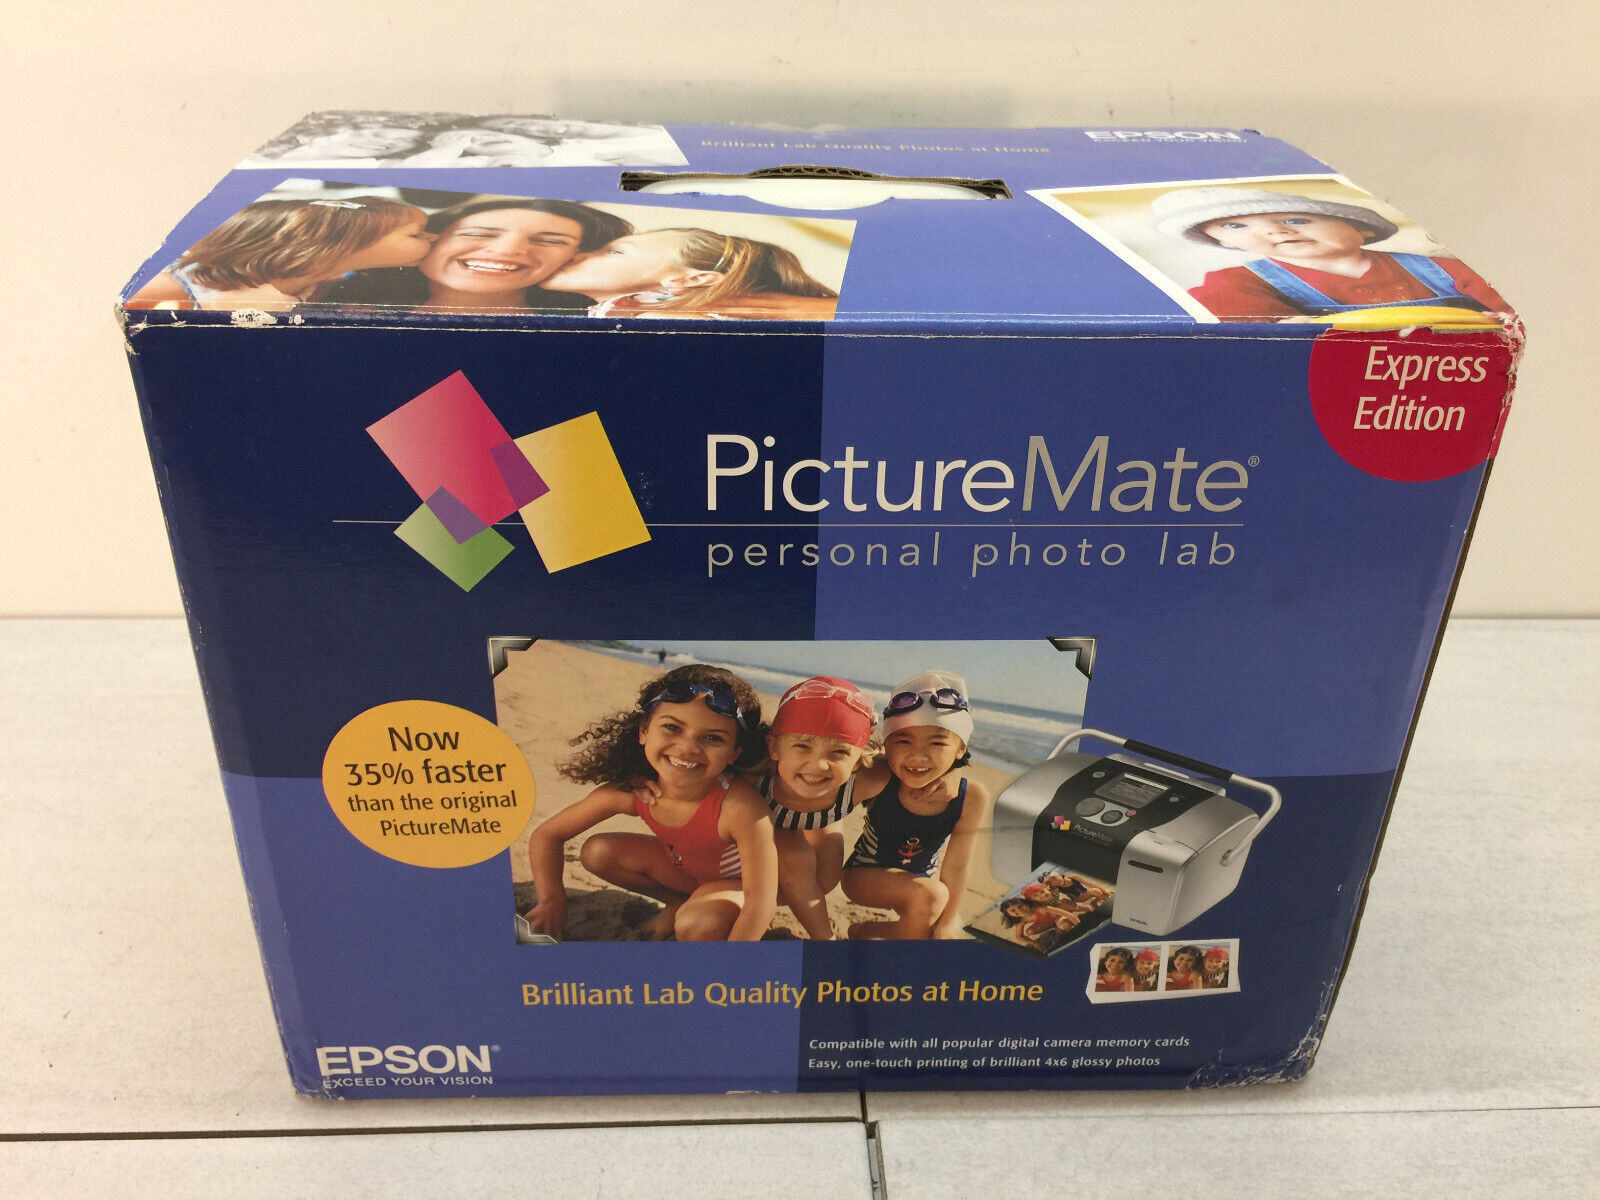 Epson PictureMate Express Edition Digital Photo Inkjet Printer B271A